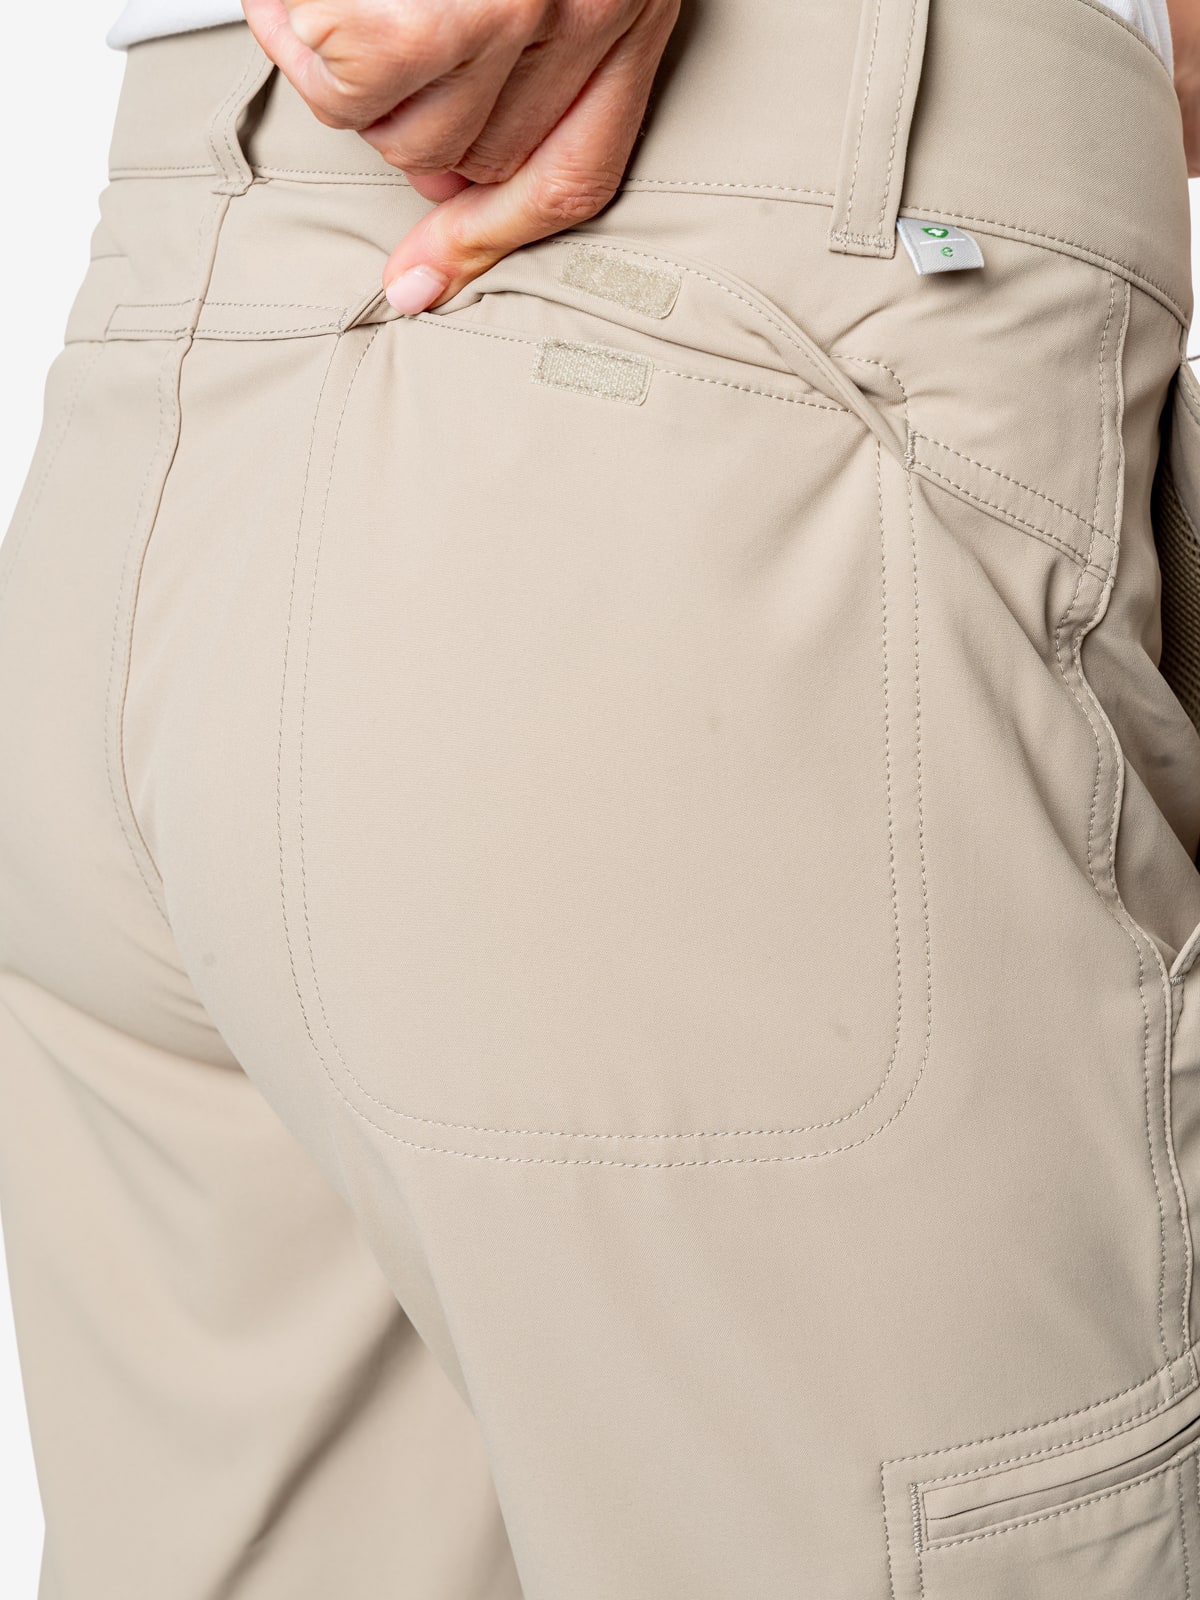 Insect Shield Women's Elements Lite Convertible Pants